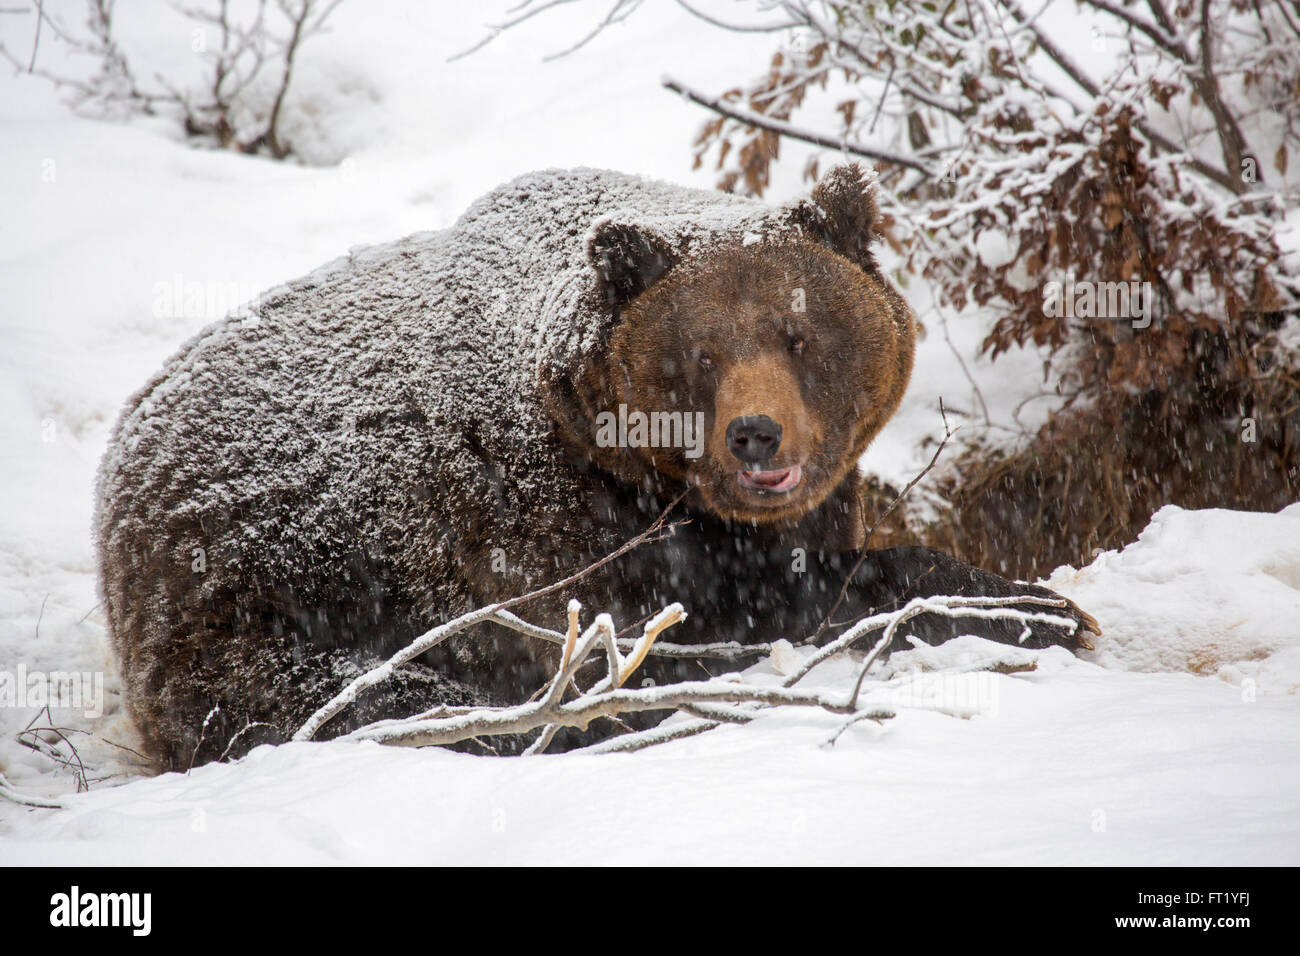 L'orso bruno (Ursus arctos) entrando in den durante la doccia di neve in autunno / inverno Foto Stock